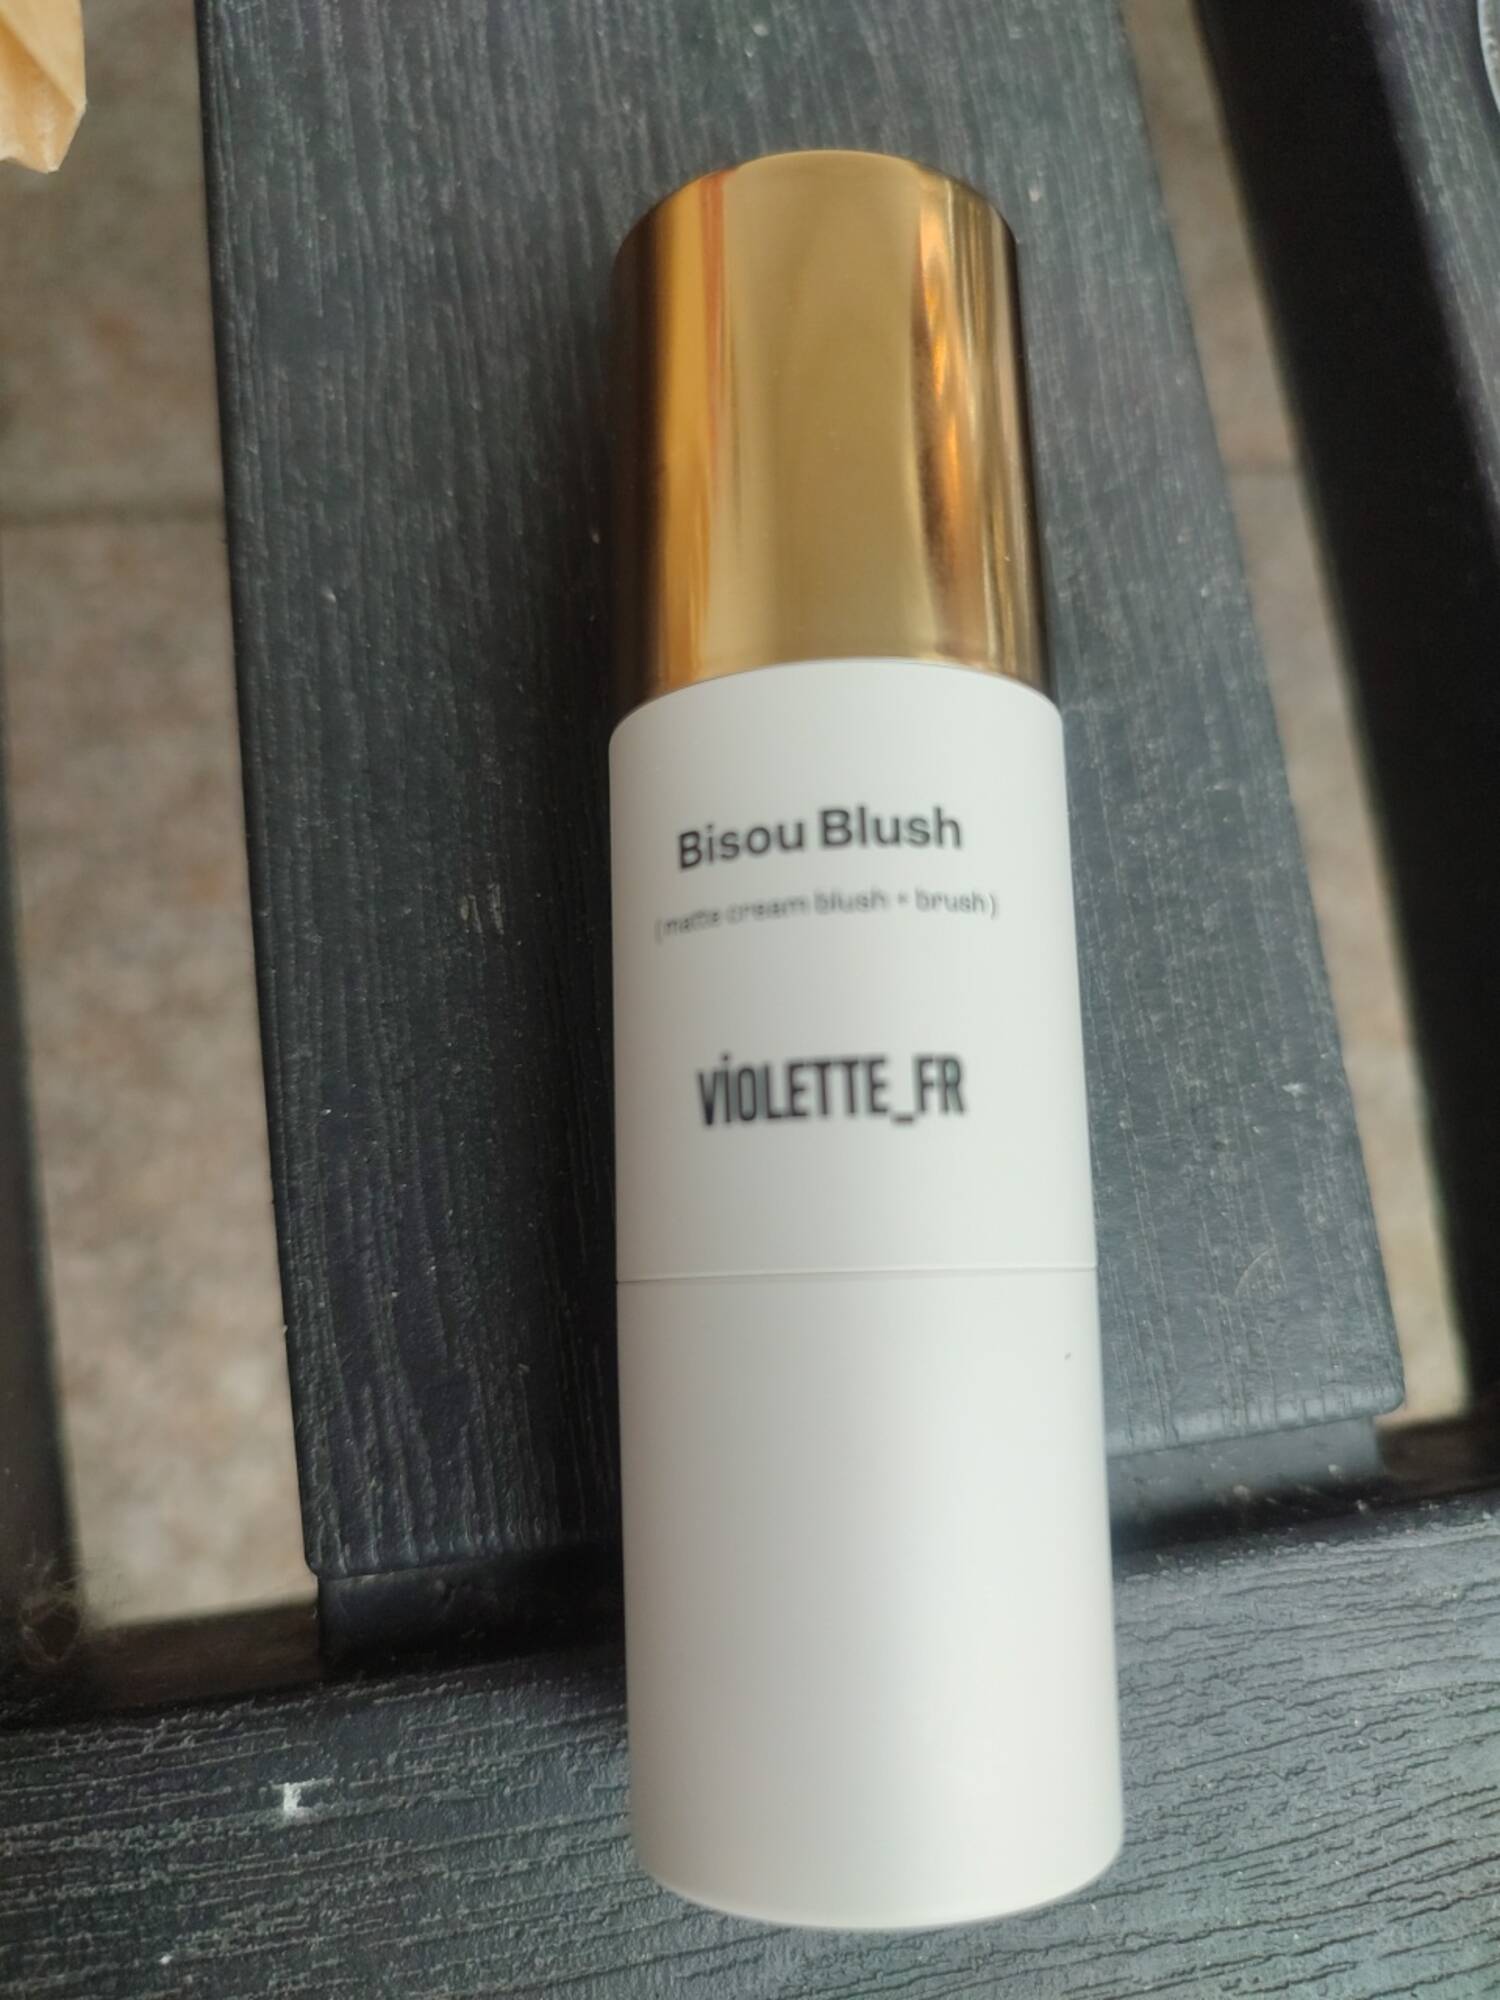 VIOLETTE_FR - Bisou blush - Matte cream blush